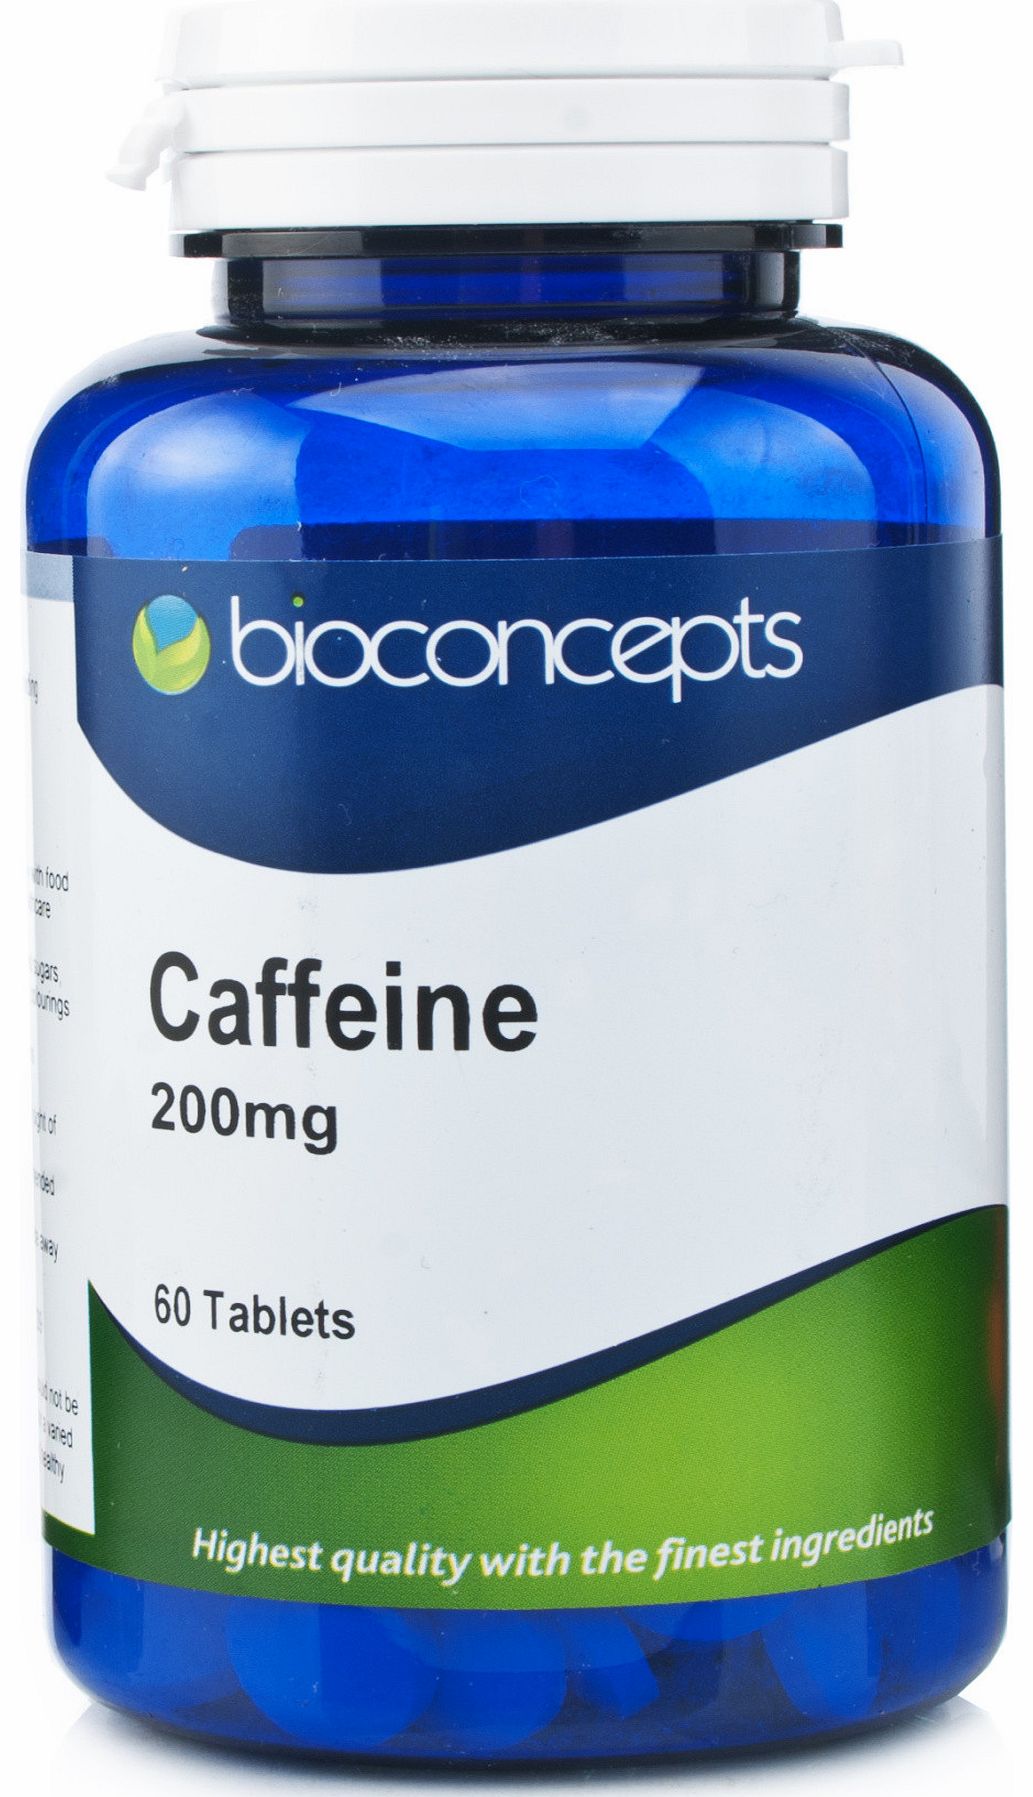 Bioconcepts Caffeine 200mg Tablets